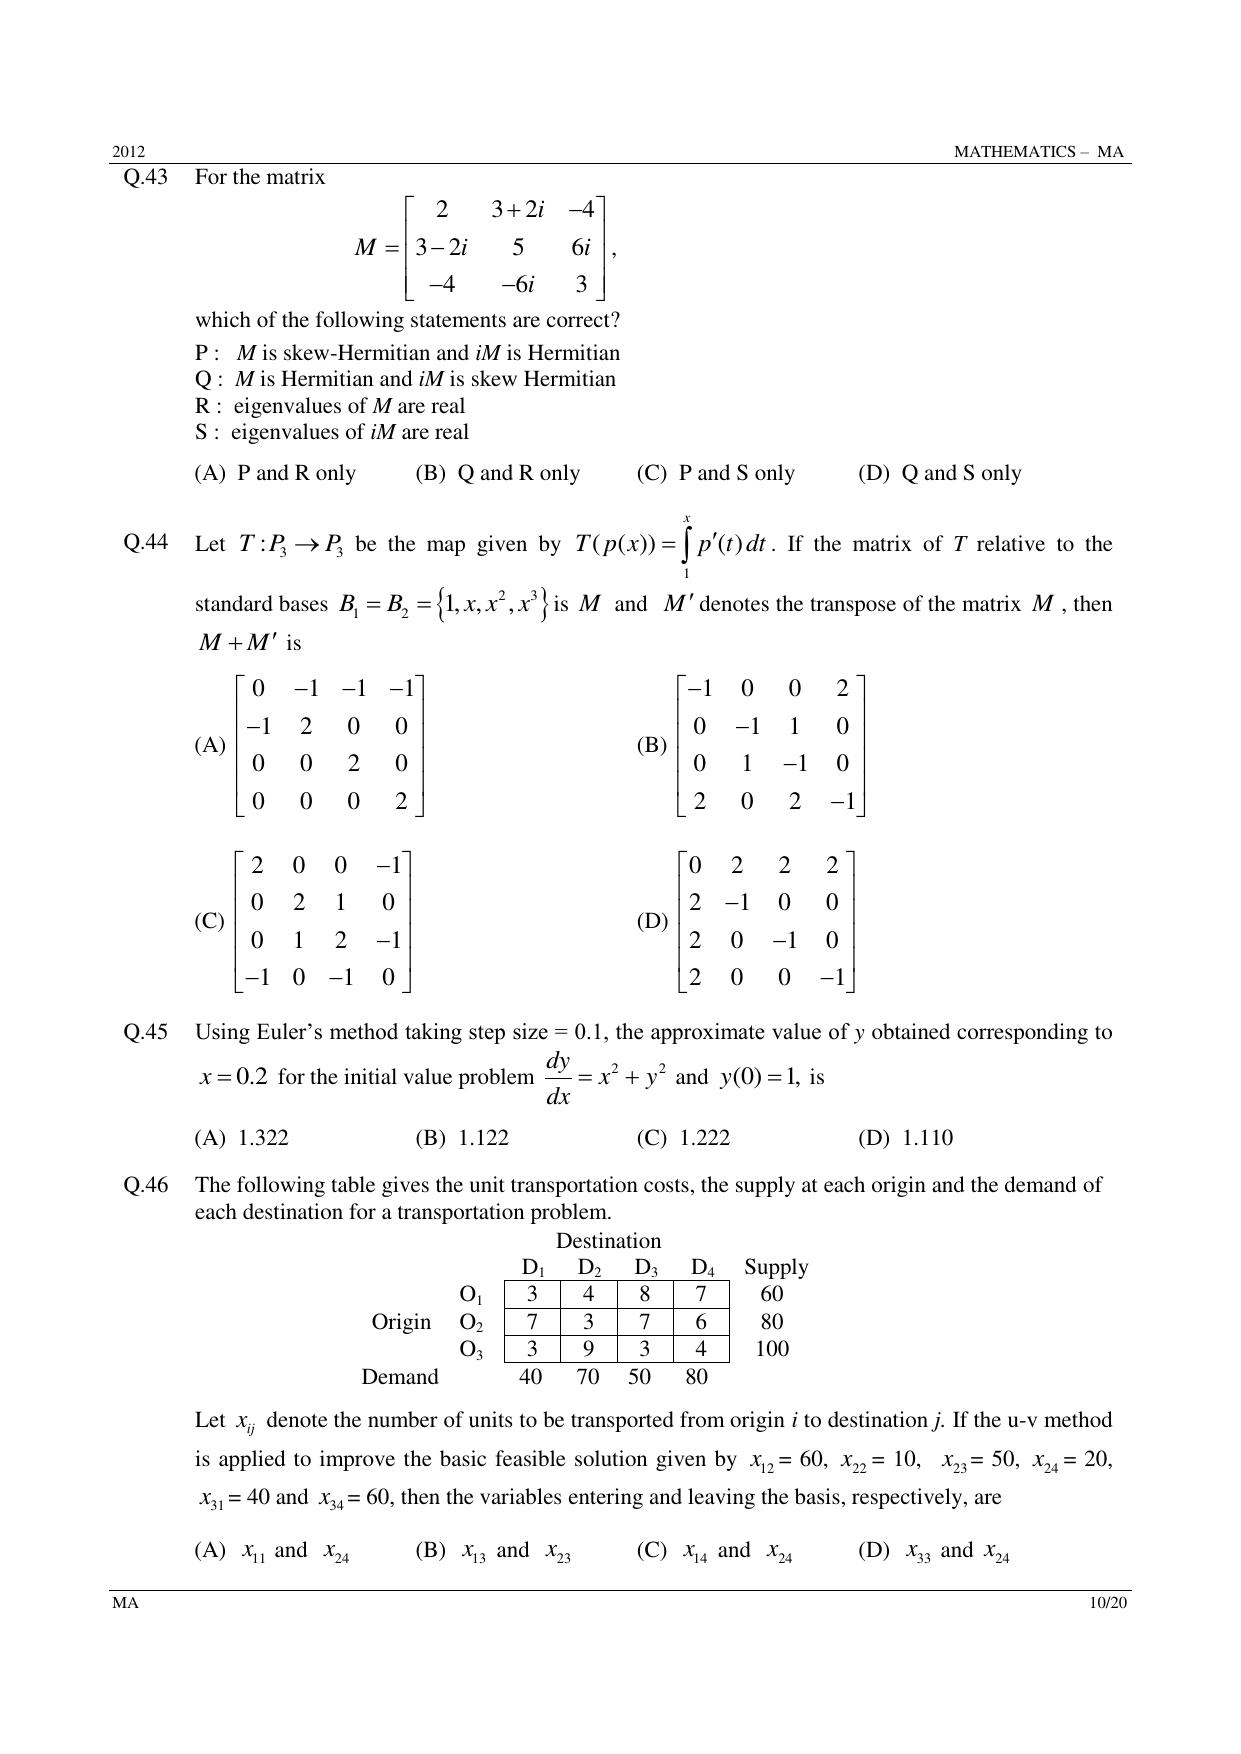 GATE 2012 Mathematics (MA) Question Paper with Answer Key - Page 10